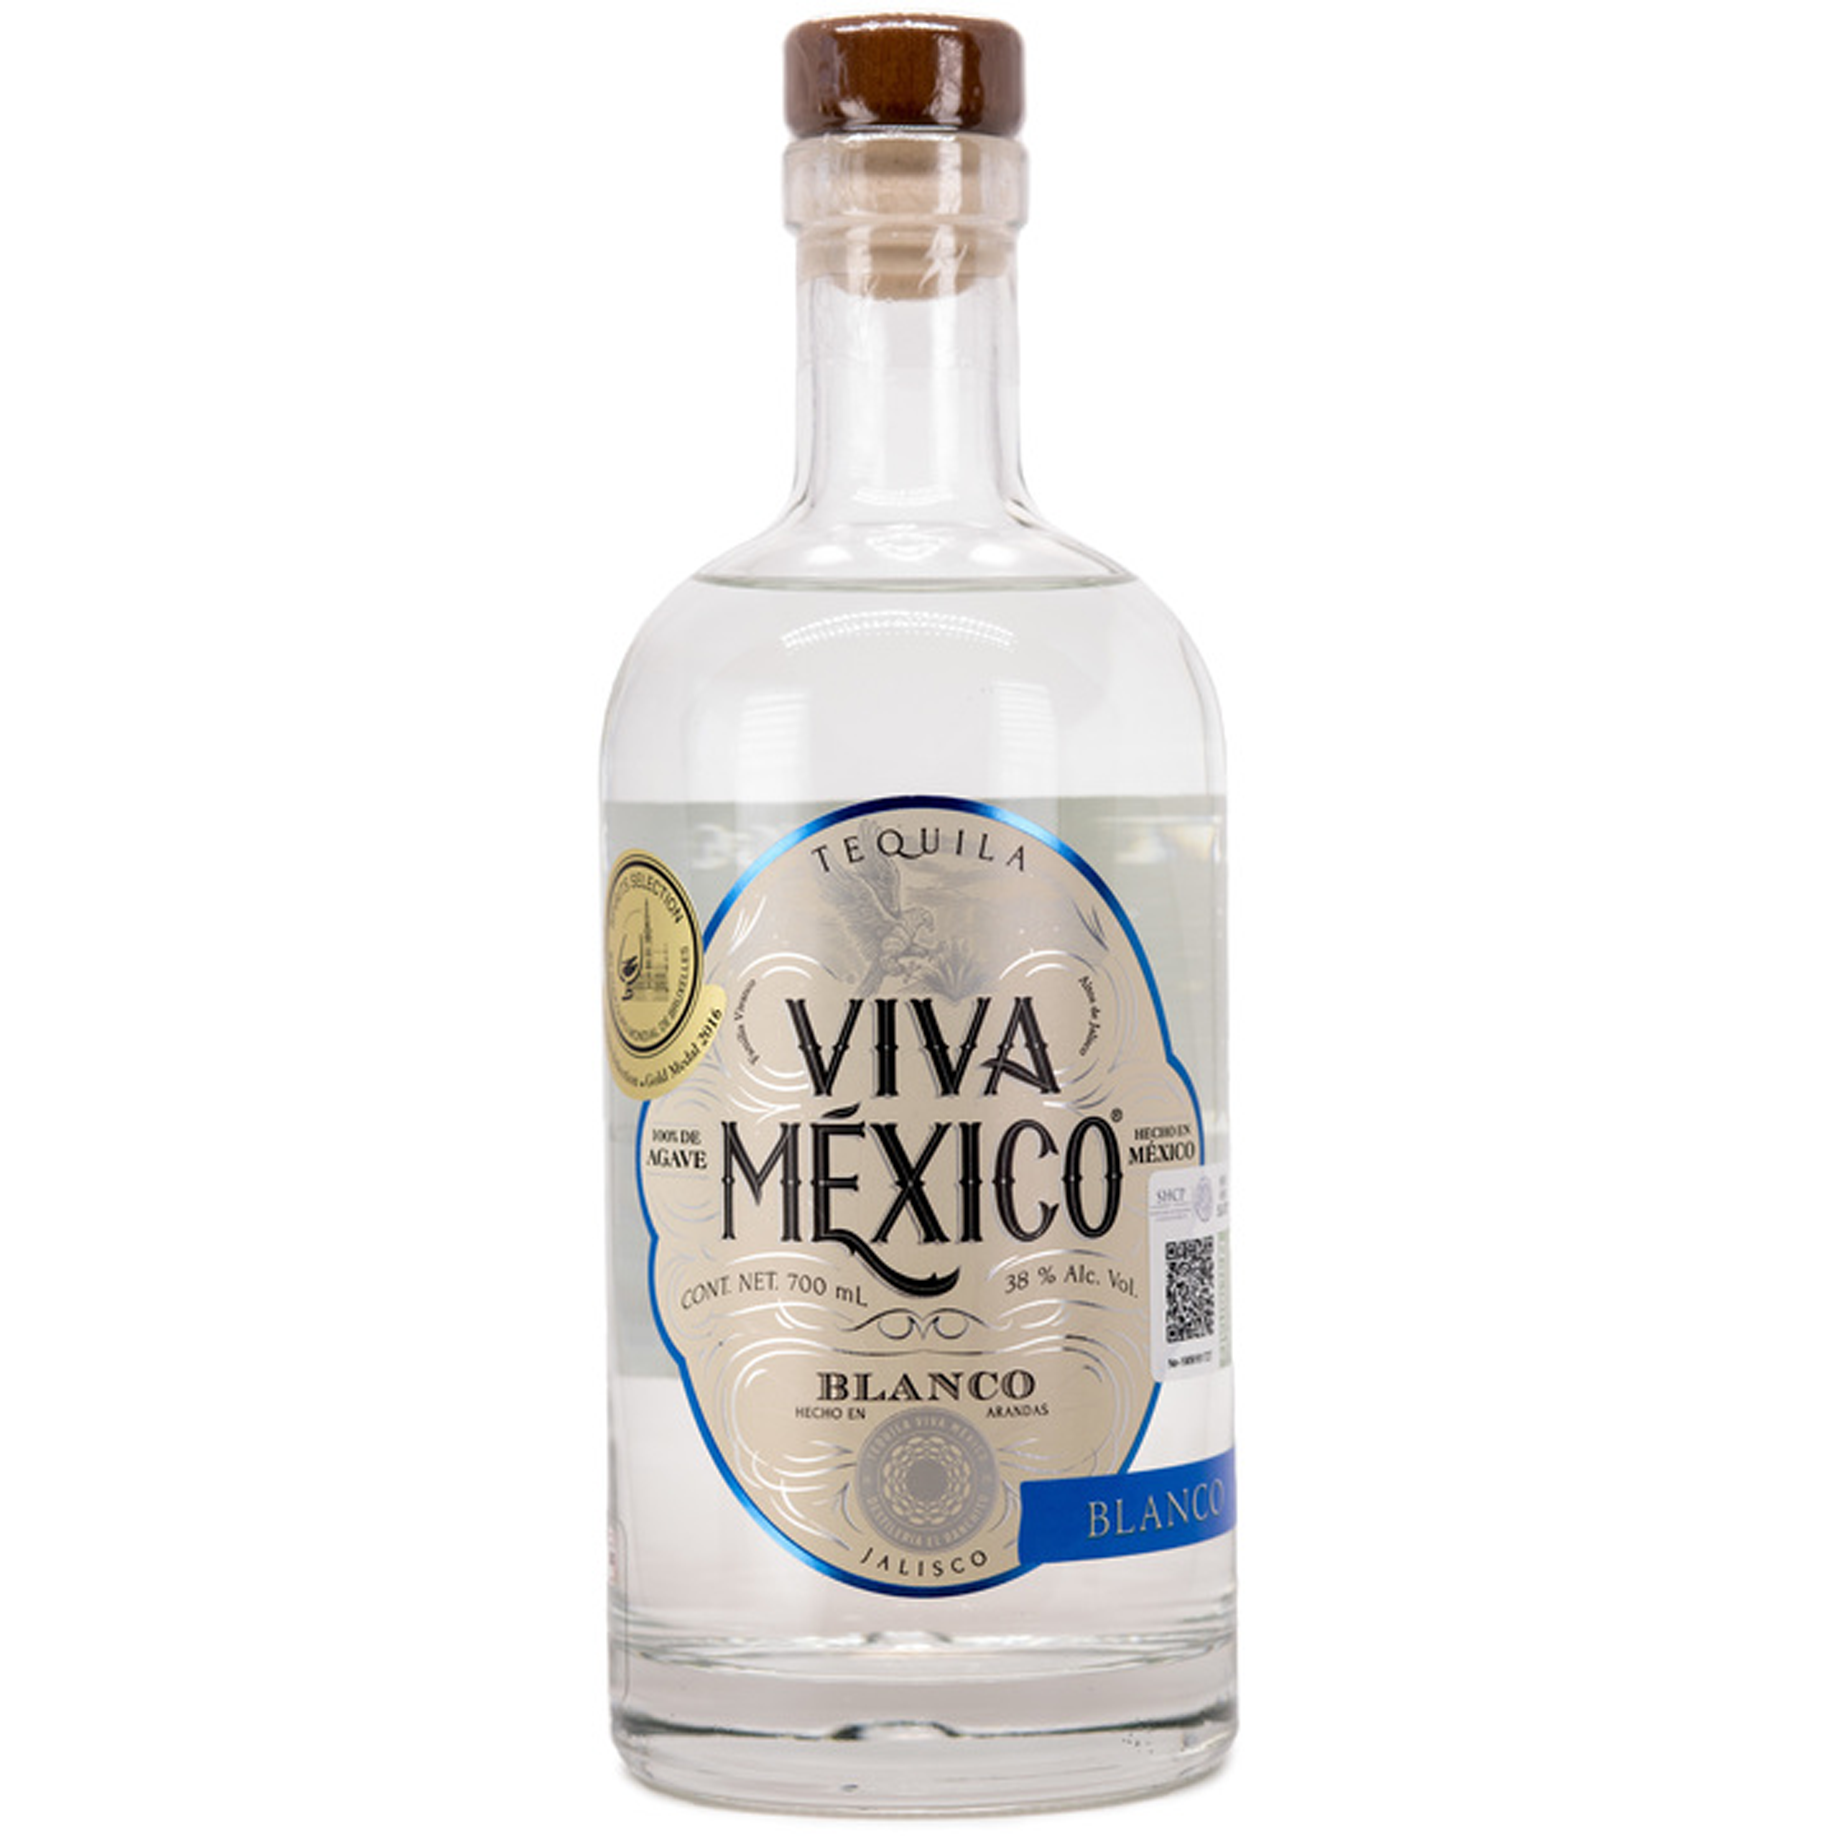 Viva Mexico Tequila - Blanco